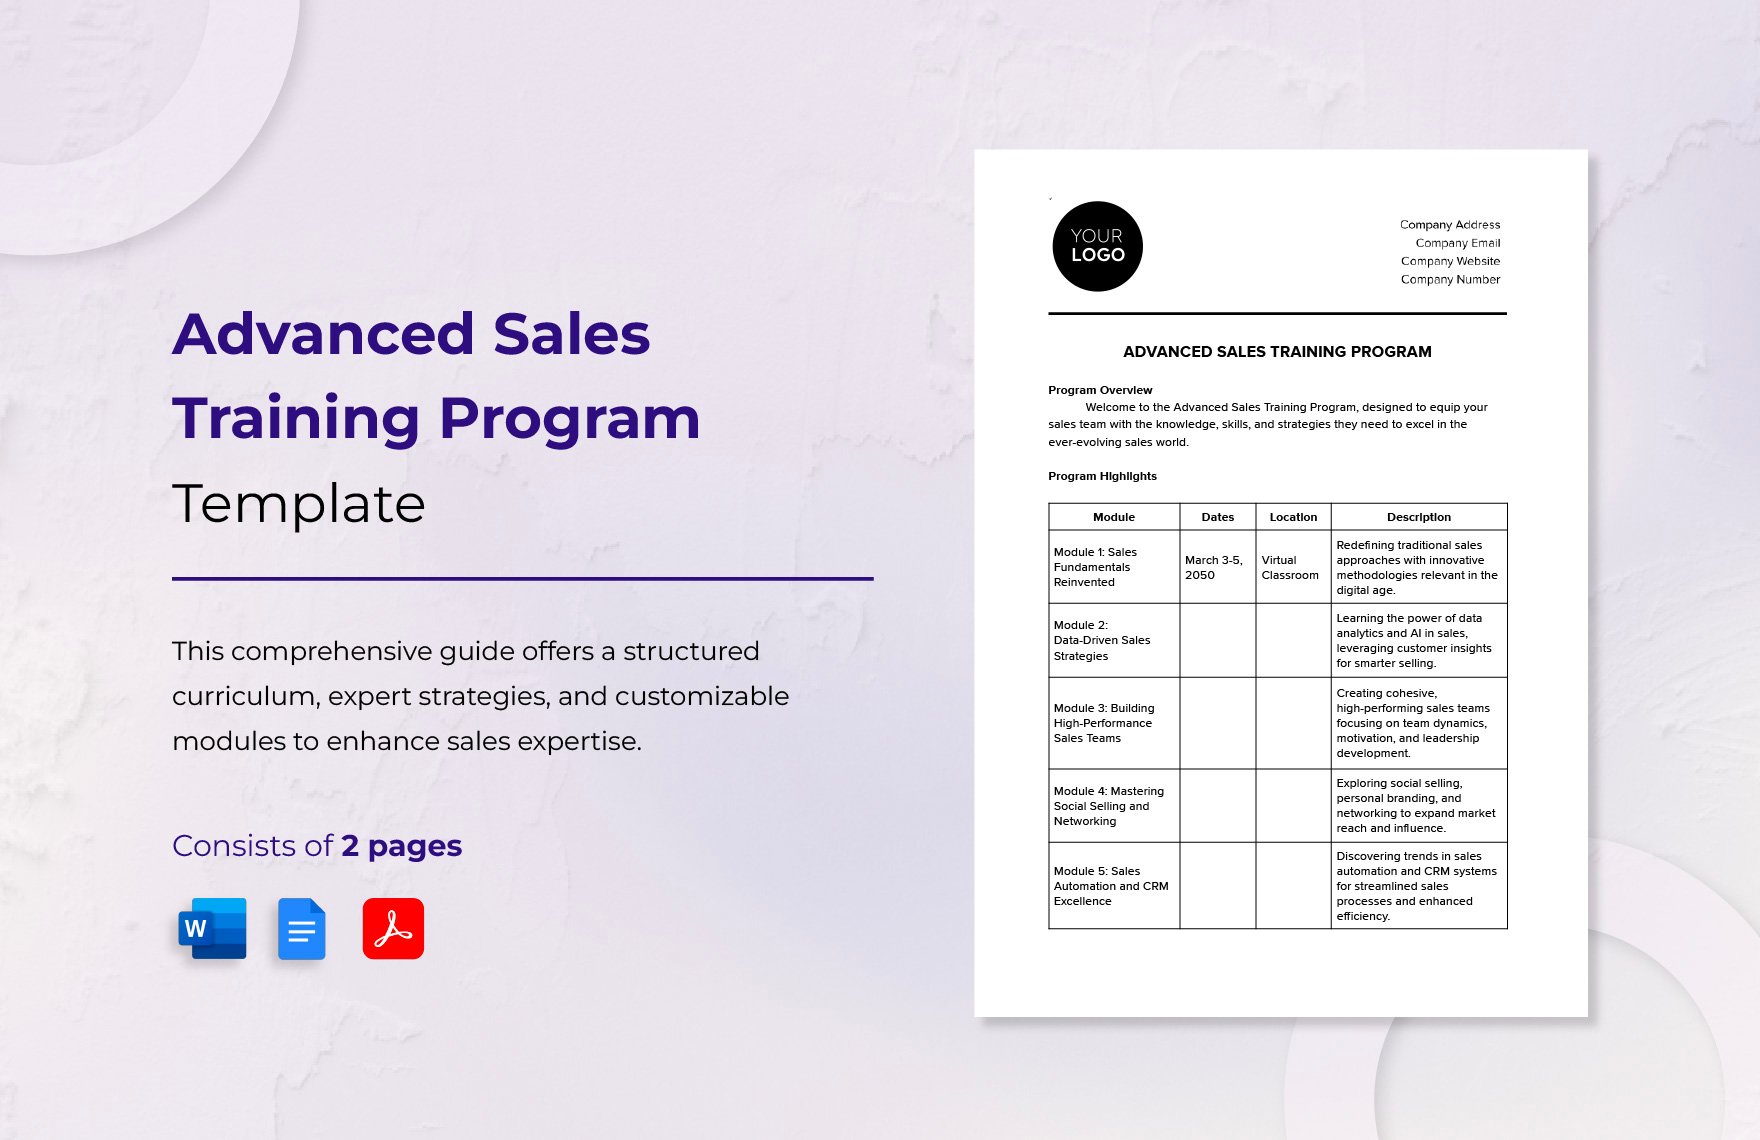 Advanced Sales Training Program Template